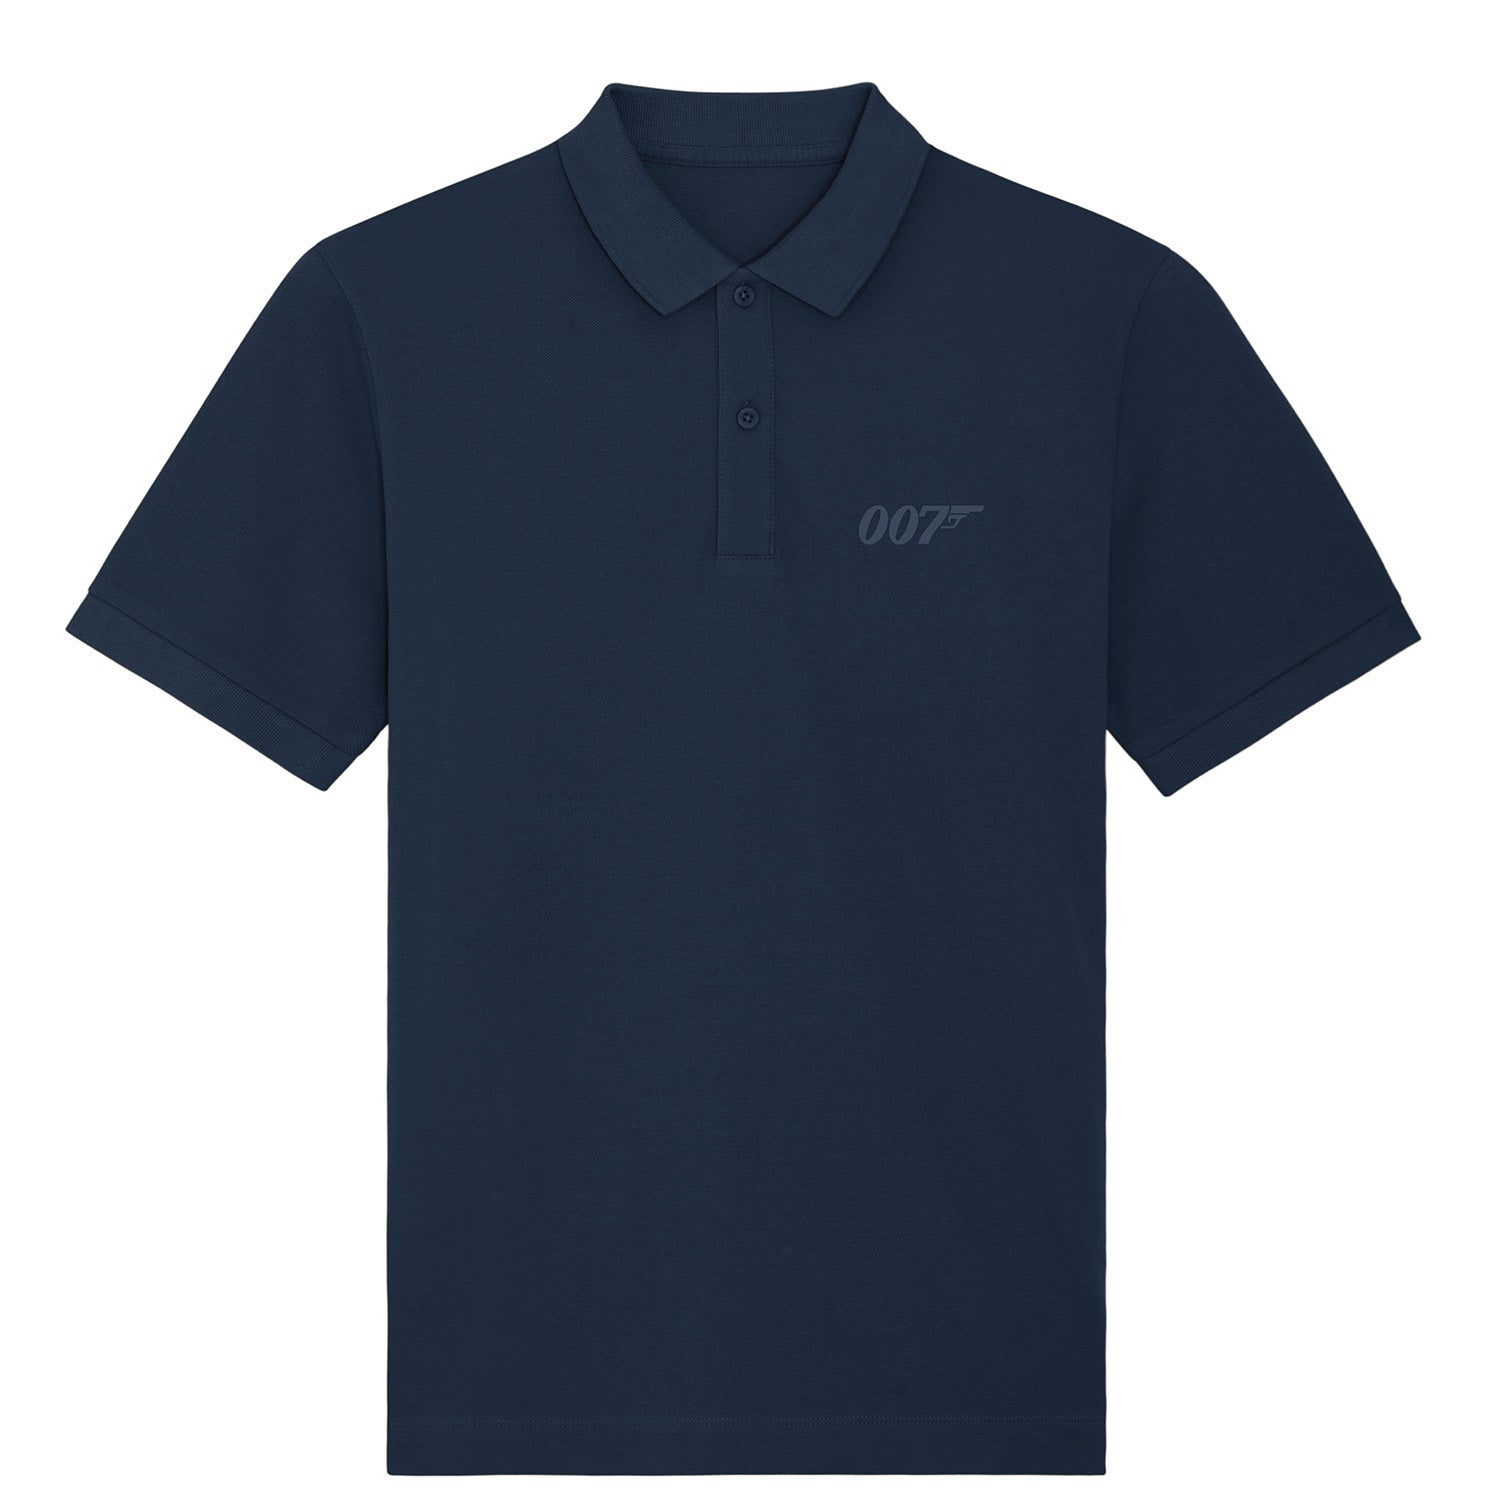 James Bond Navy 007 Embroidered Cotton Polo Shirt EML 